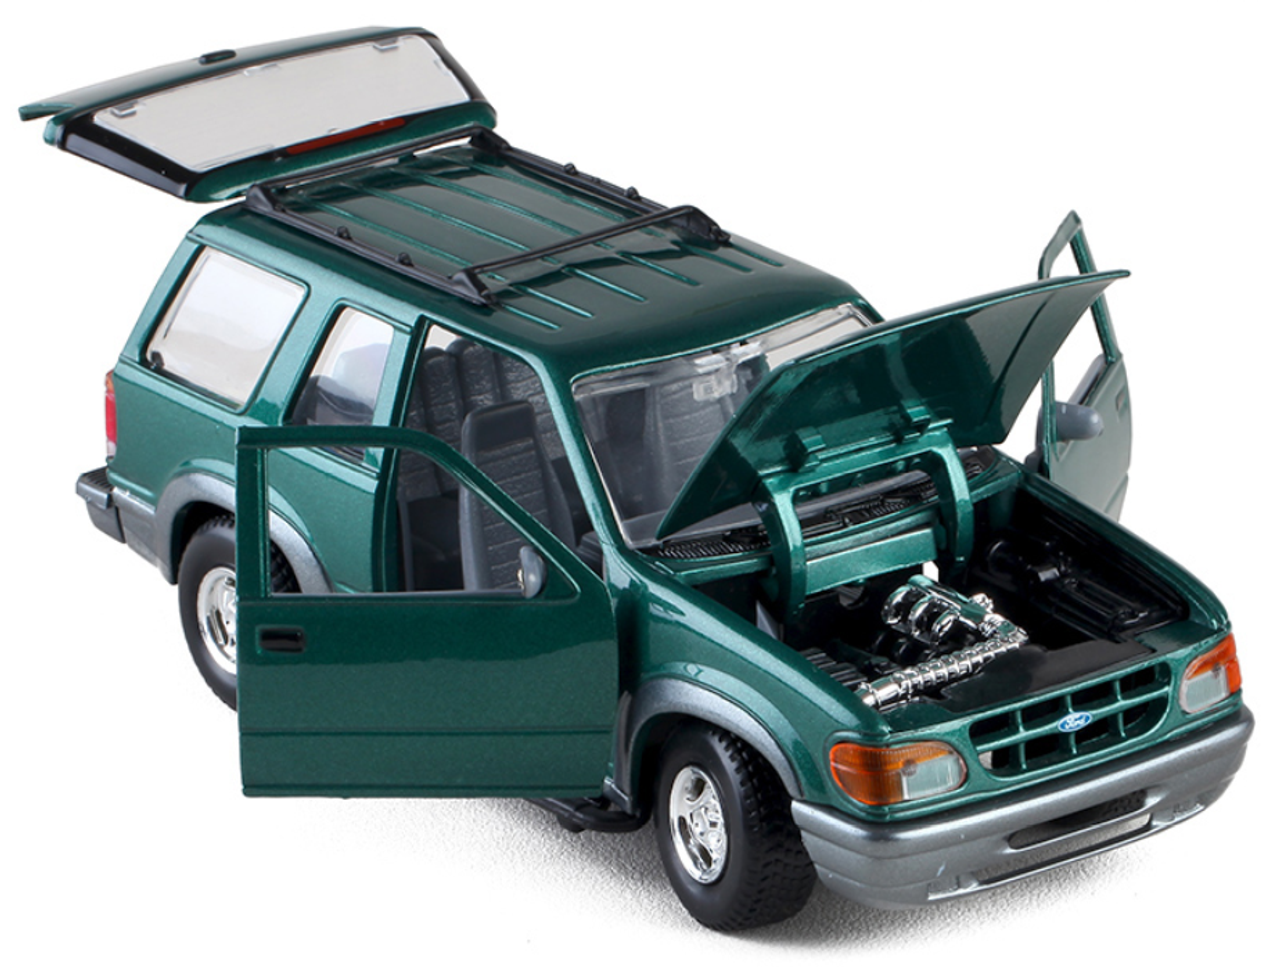 1/24 Ford Explorer (Green) Diecast Car Model (no box)